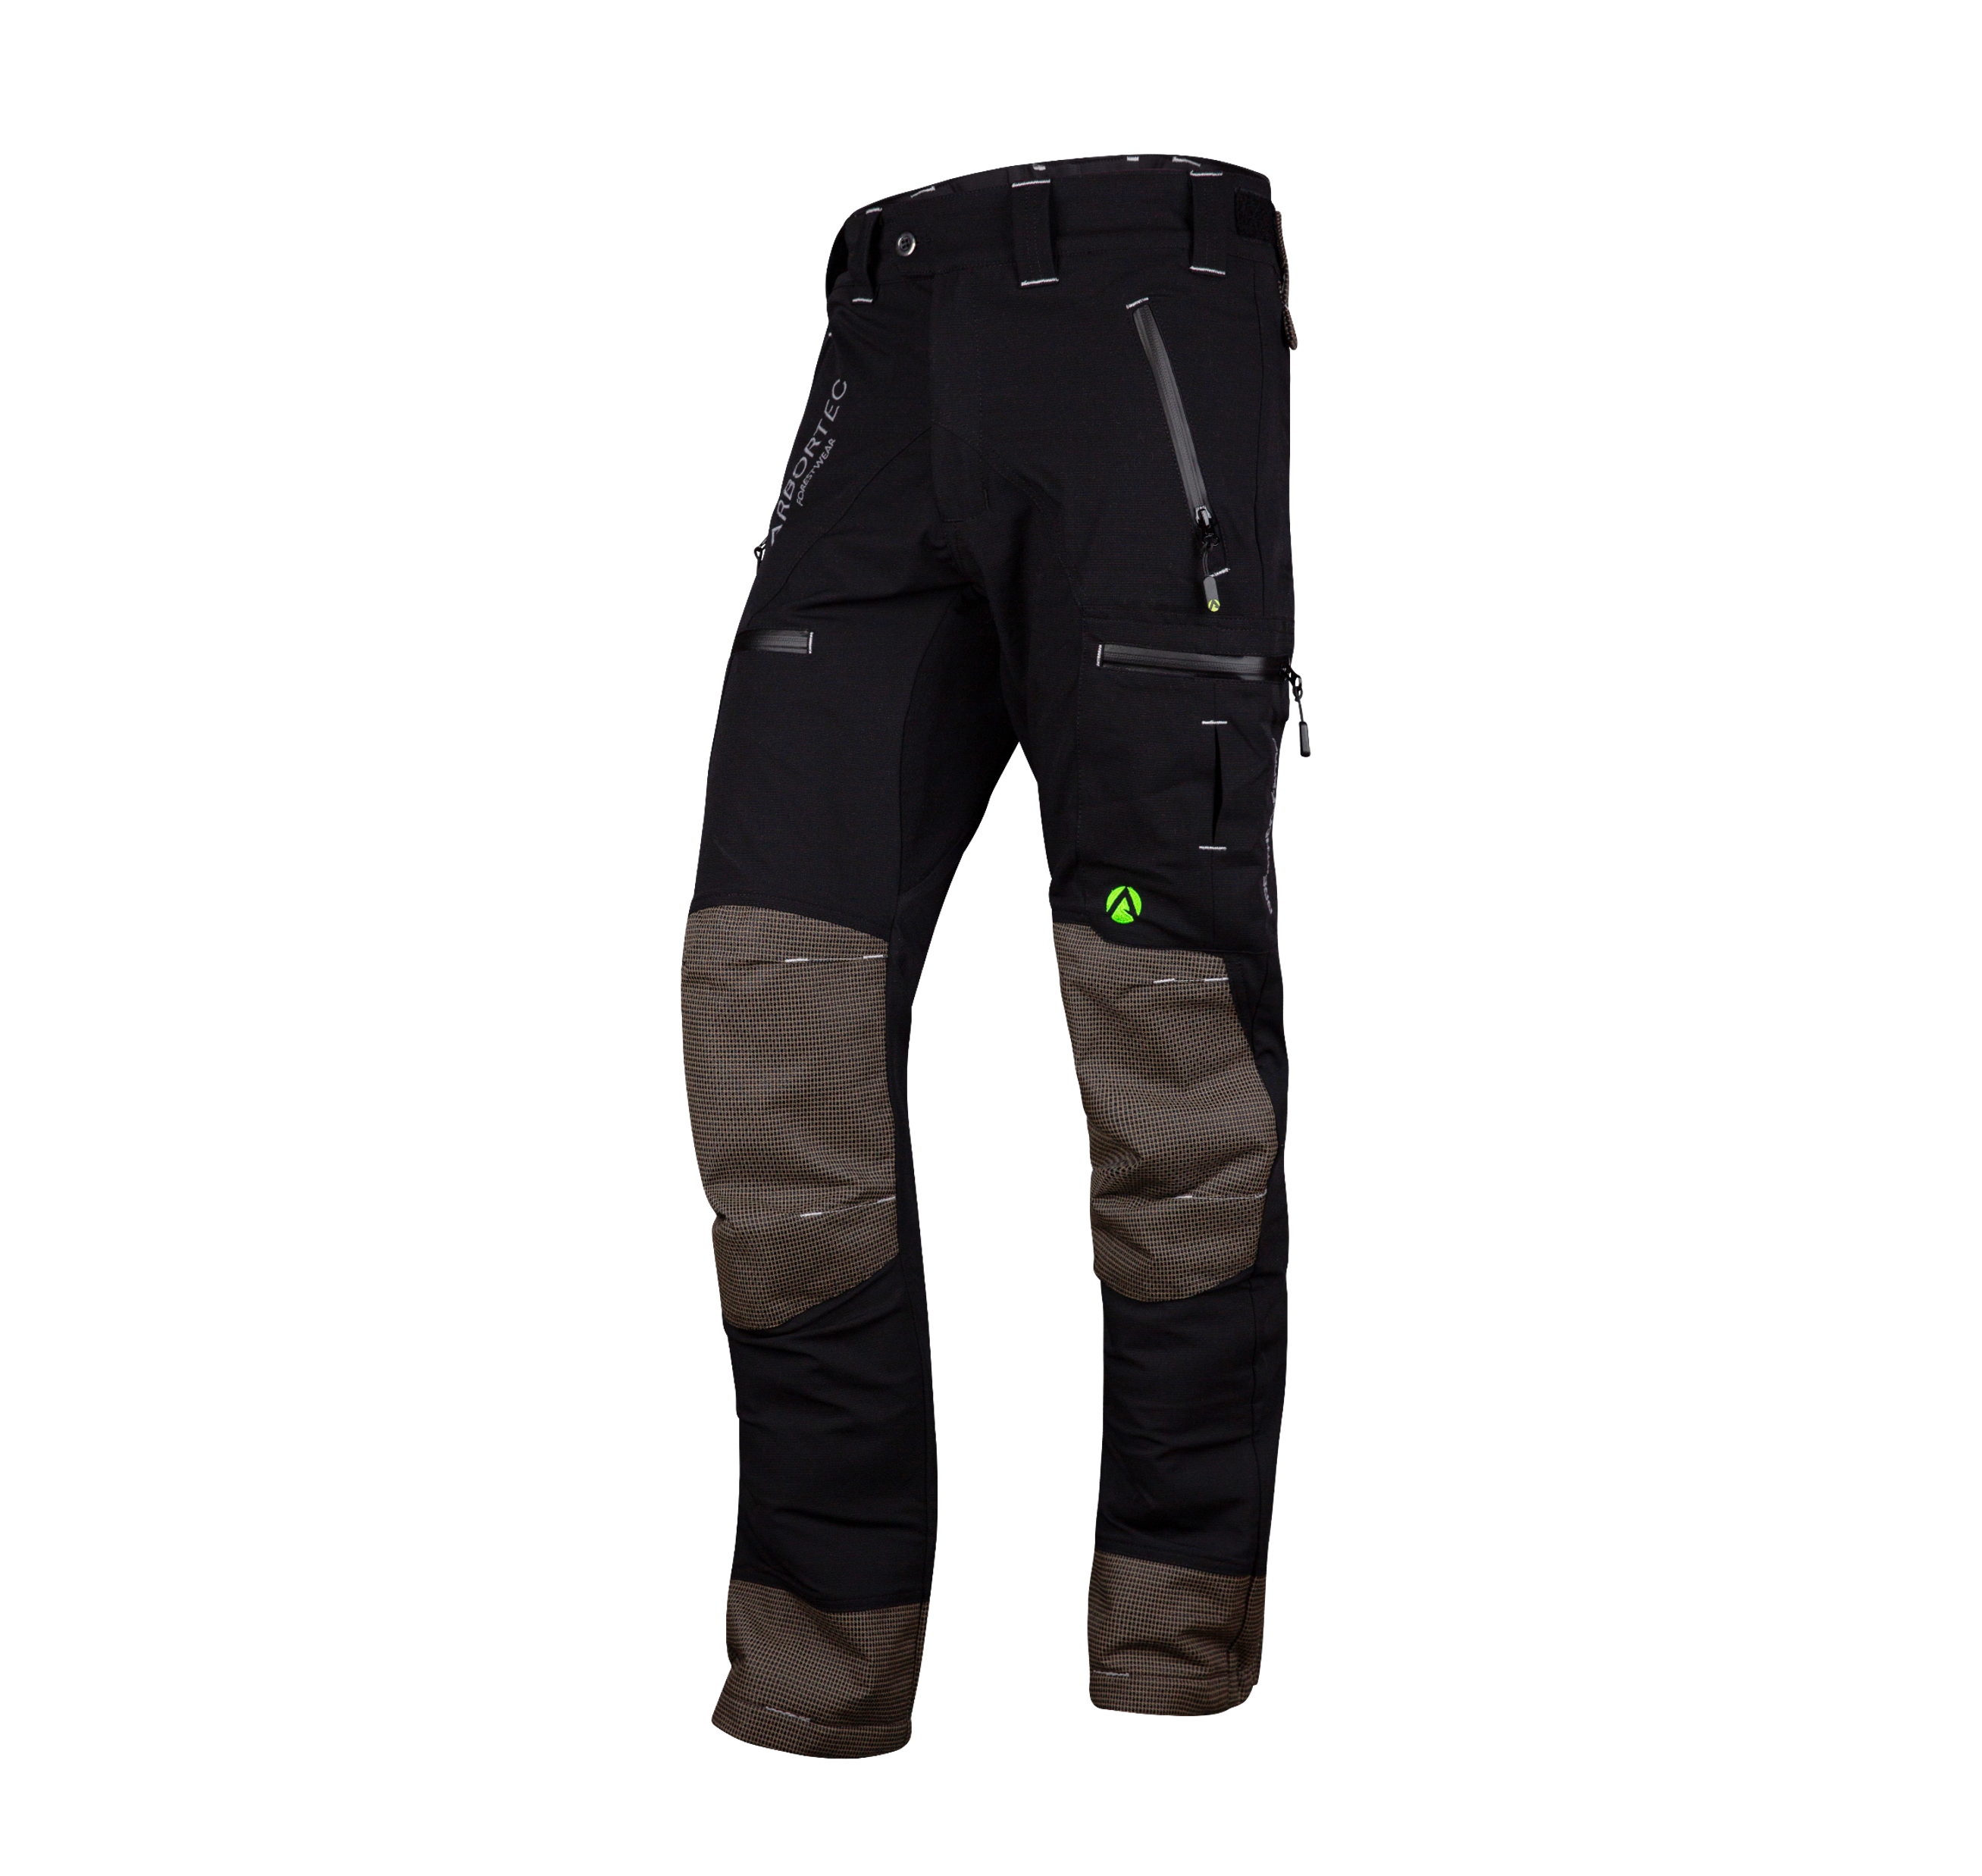 AT4160 Breatheflex Pro Trousers Non-Protective - Black